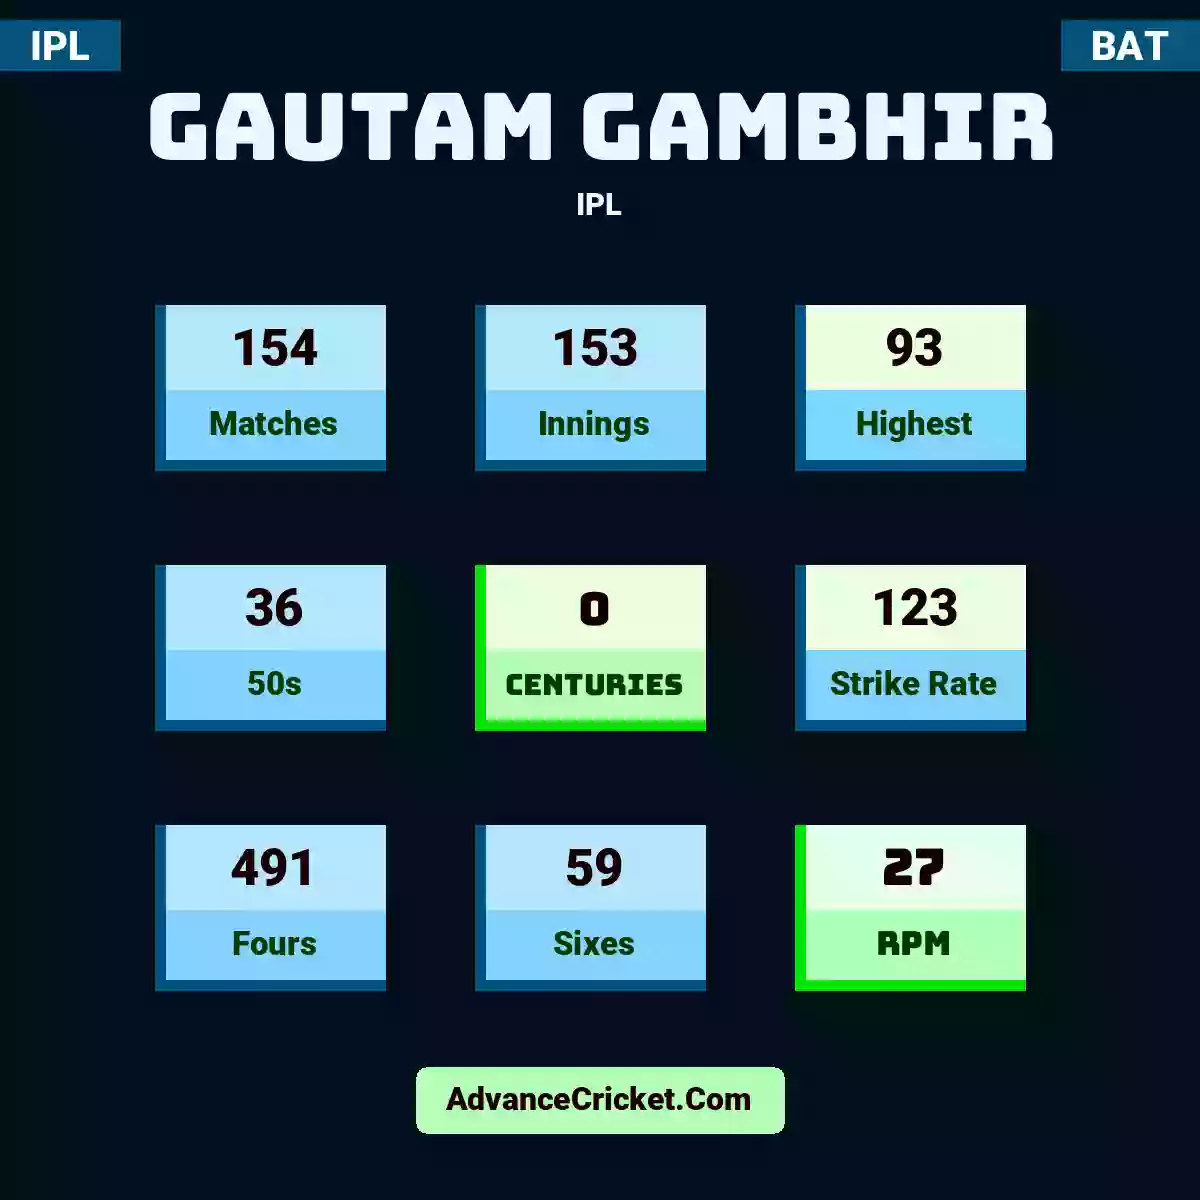 Gautam Gambhir IPL , Gautam Gambhir played 154 matches, scored 93 runs as highest, 36 half-centuries, and 0 centuries, with a strike rate of 123. G.Gambhir hit 491 fours and 59 sixes, with an RPM of 27.